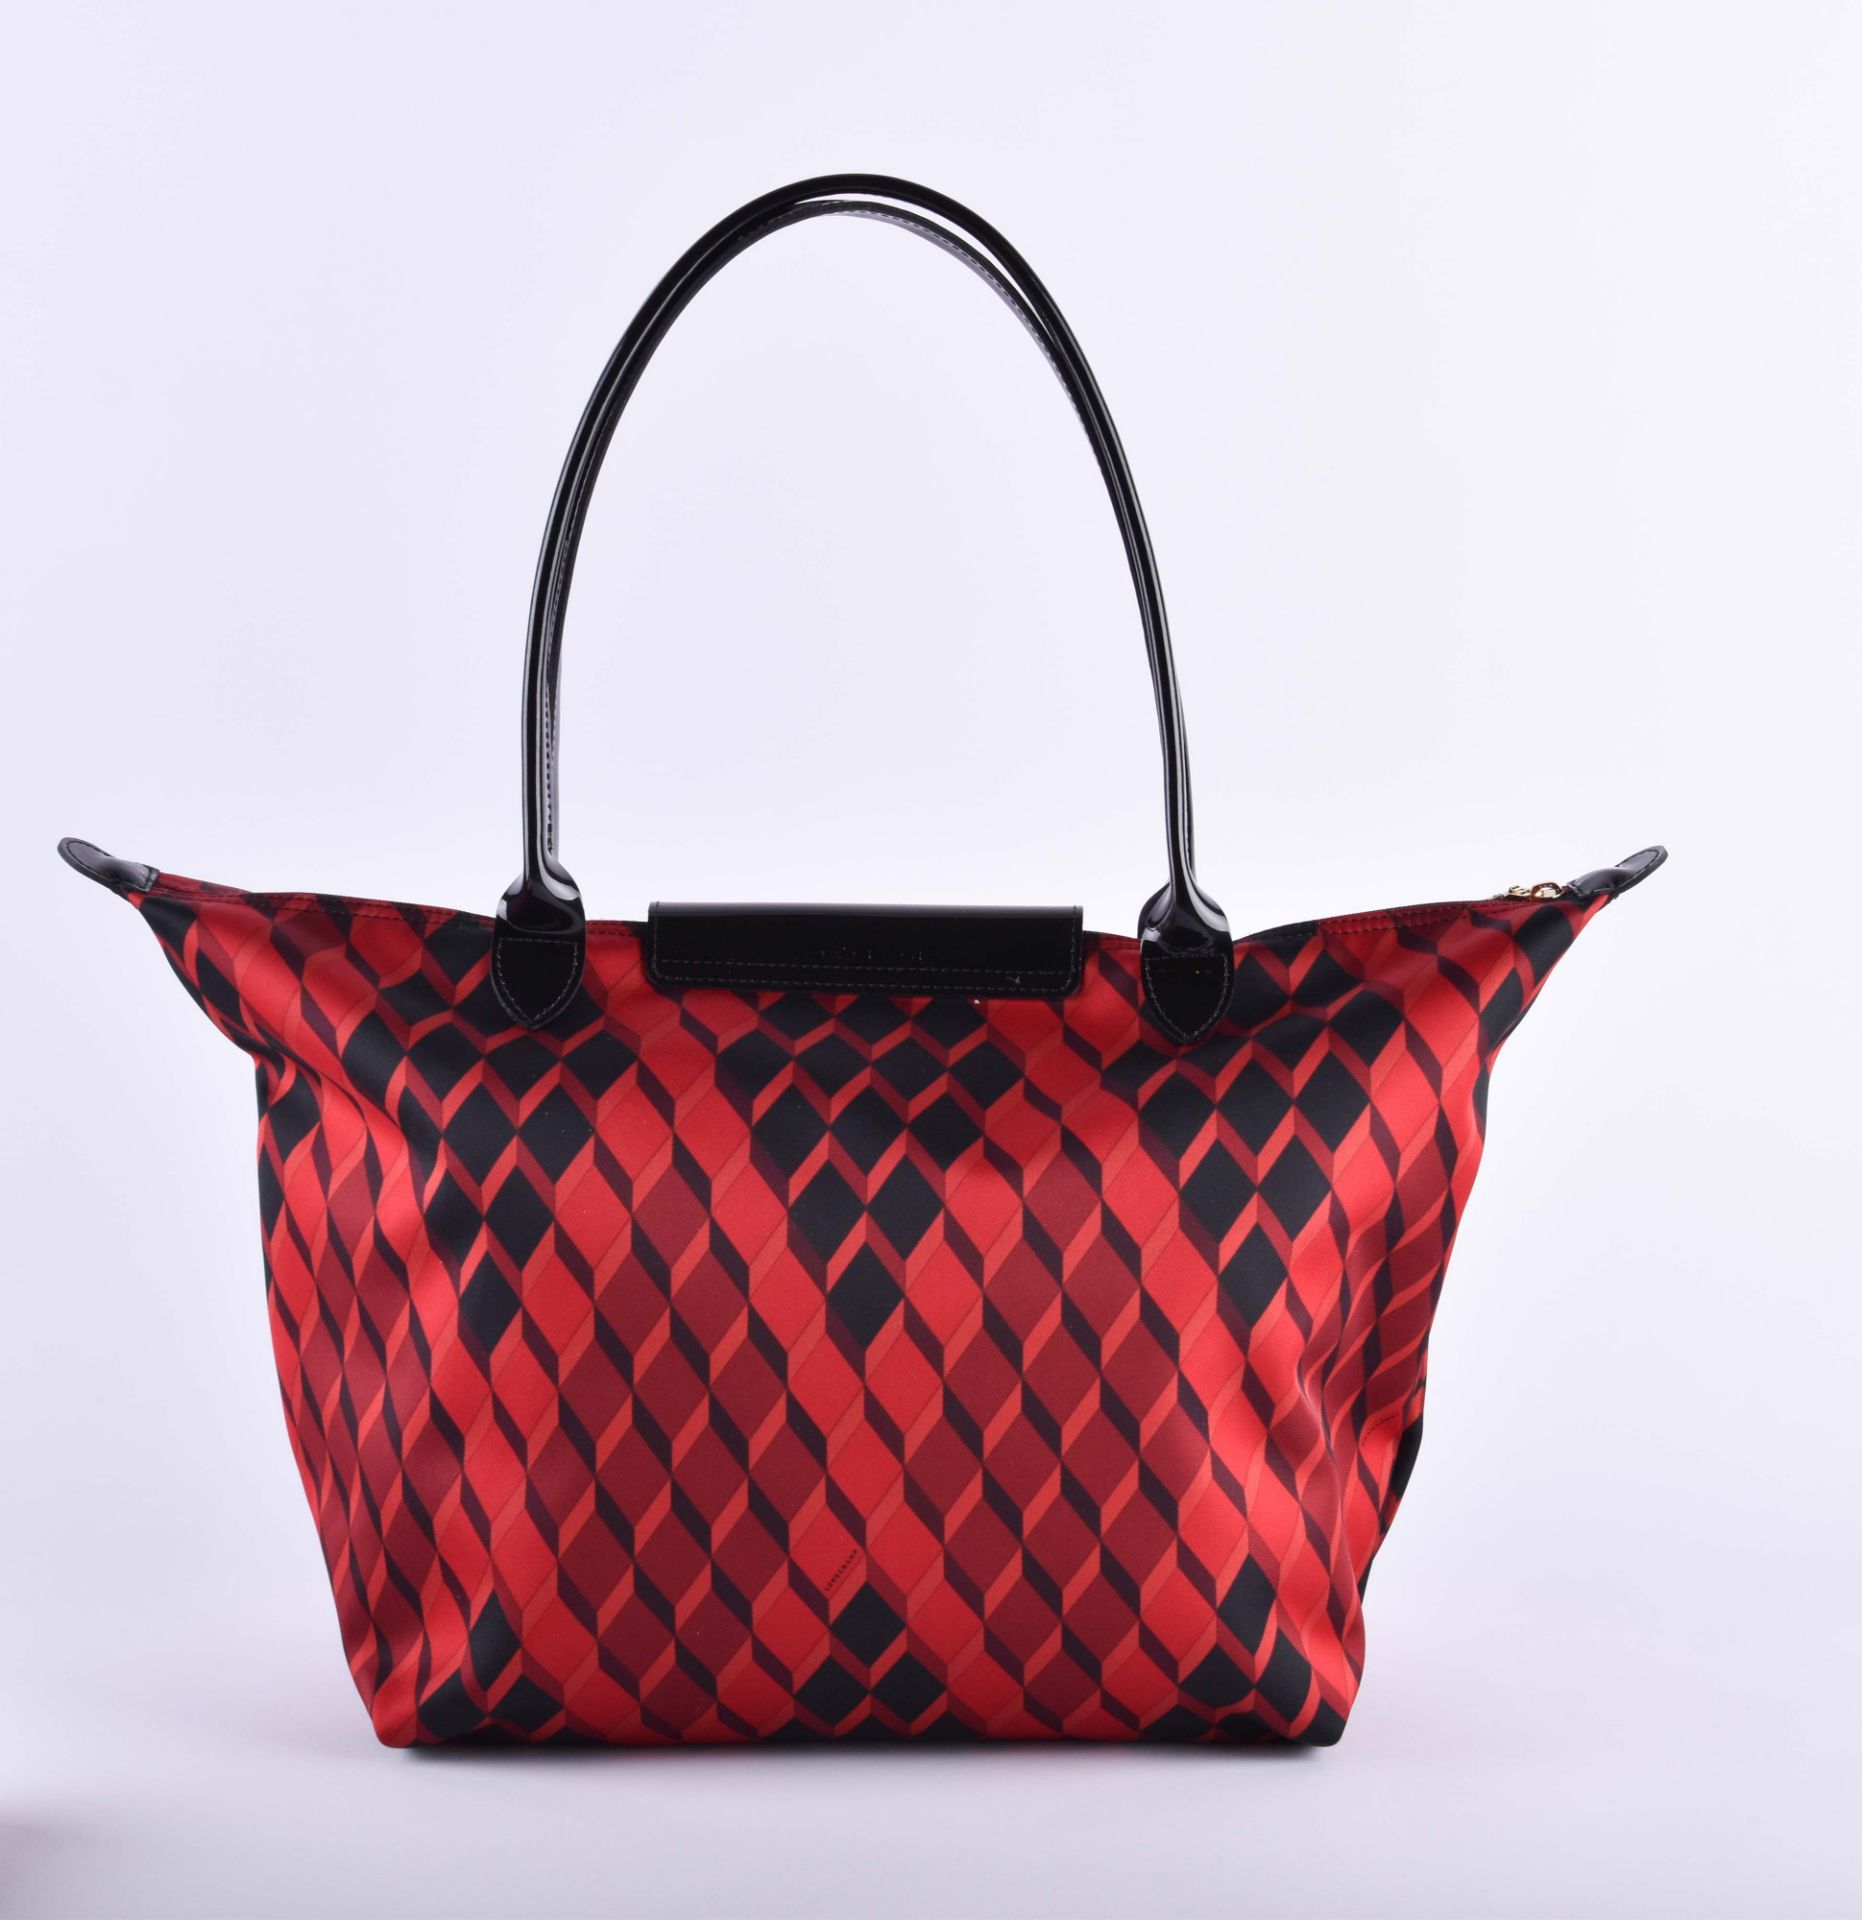 Handbag Longchamp Le Pliage modele depose - Image 5 of 6